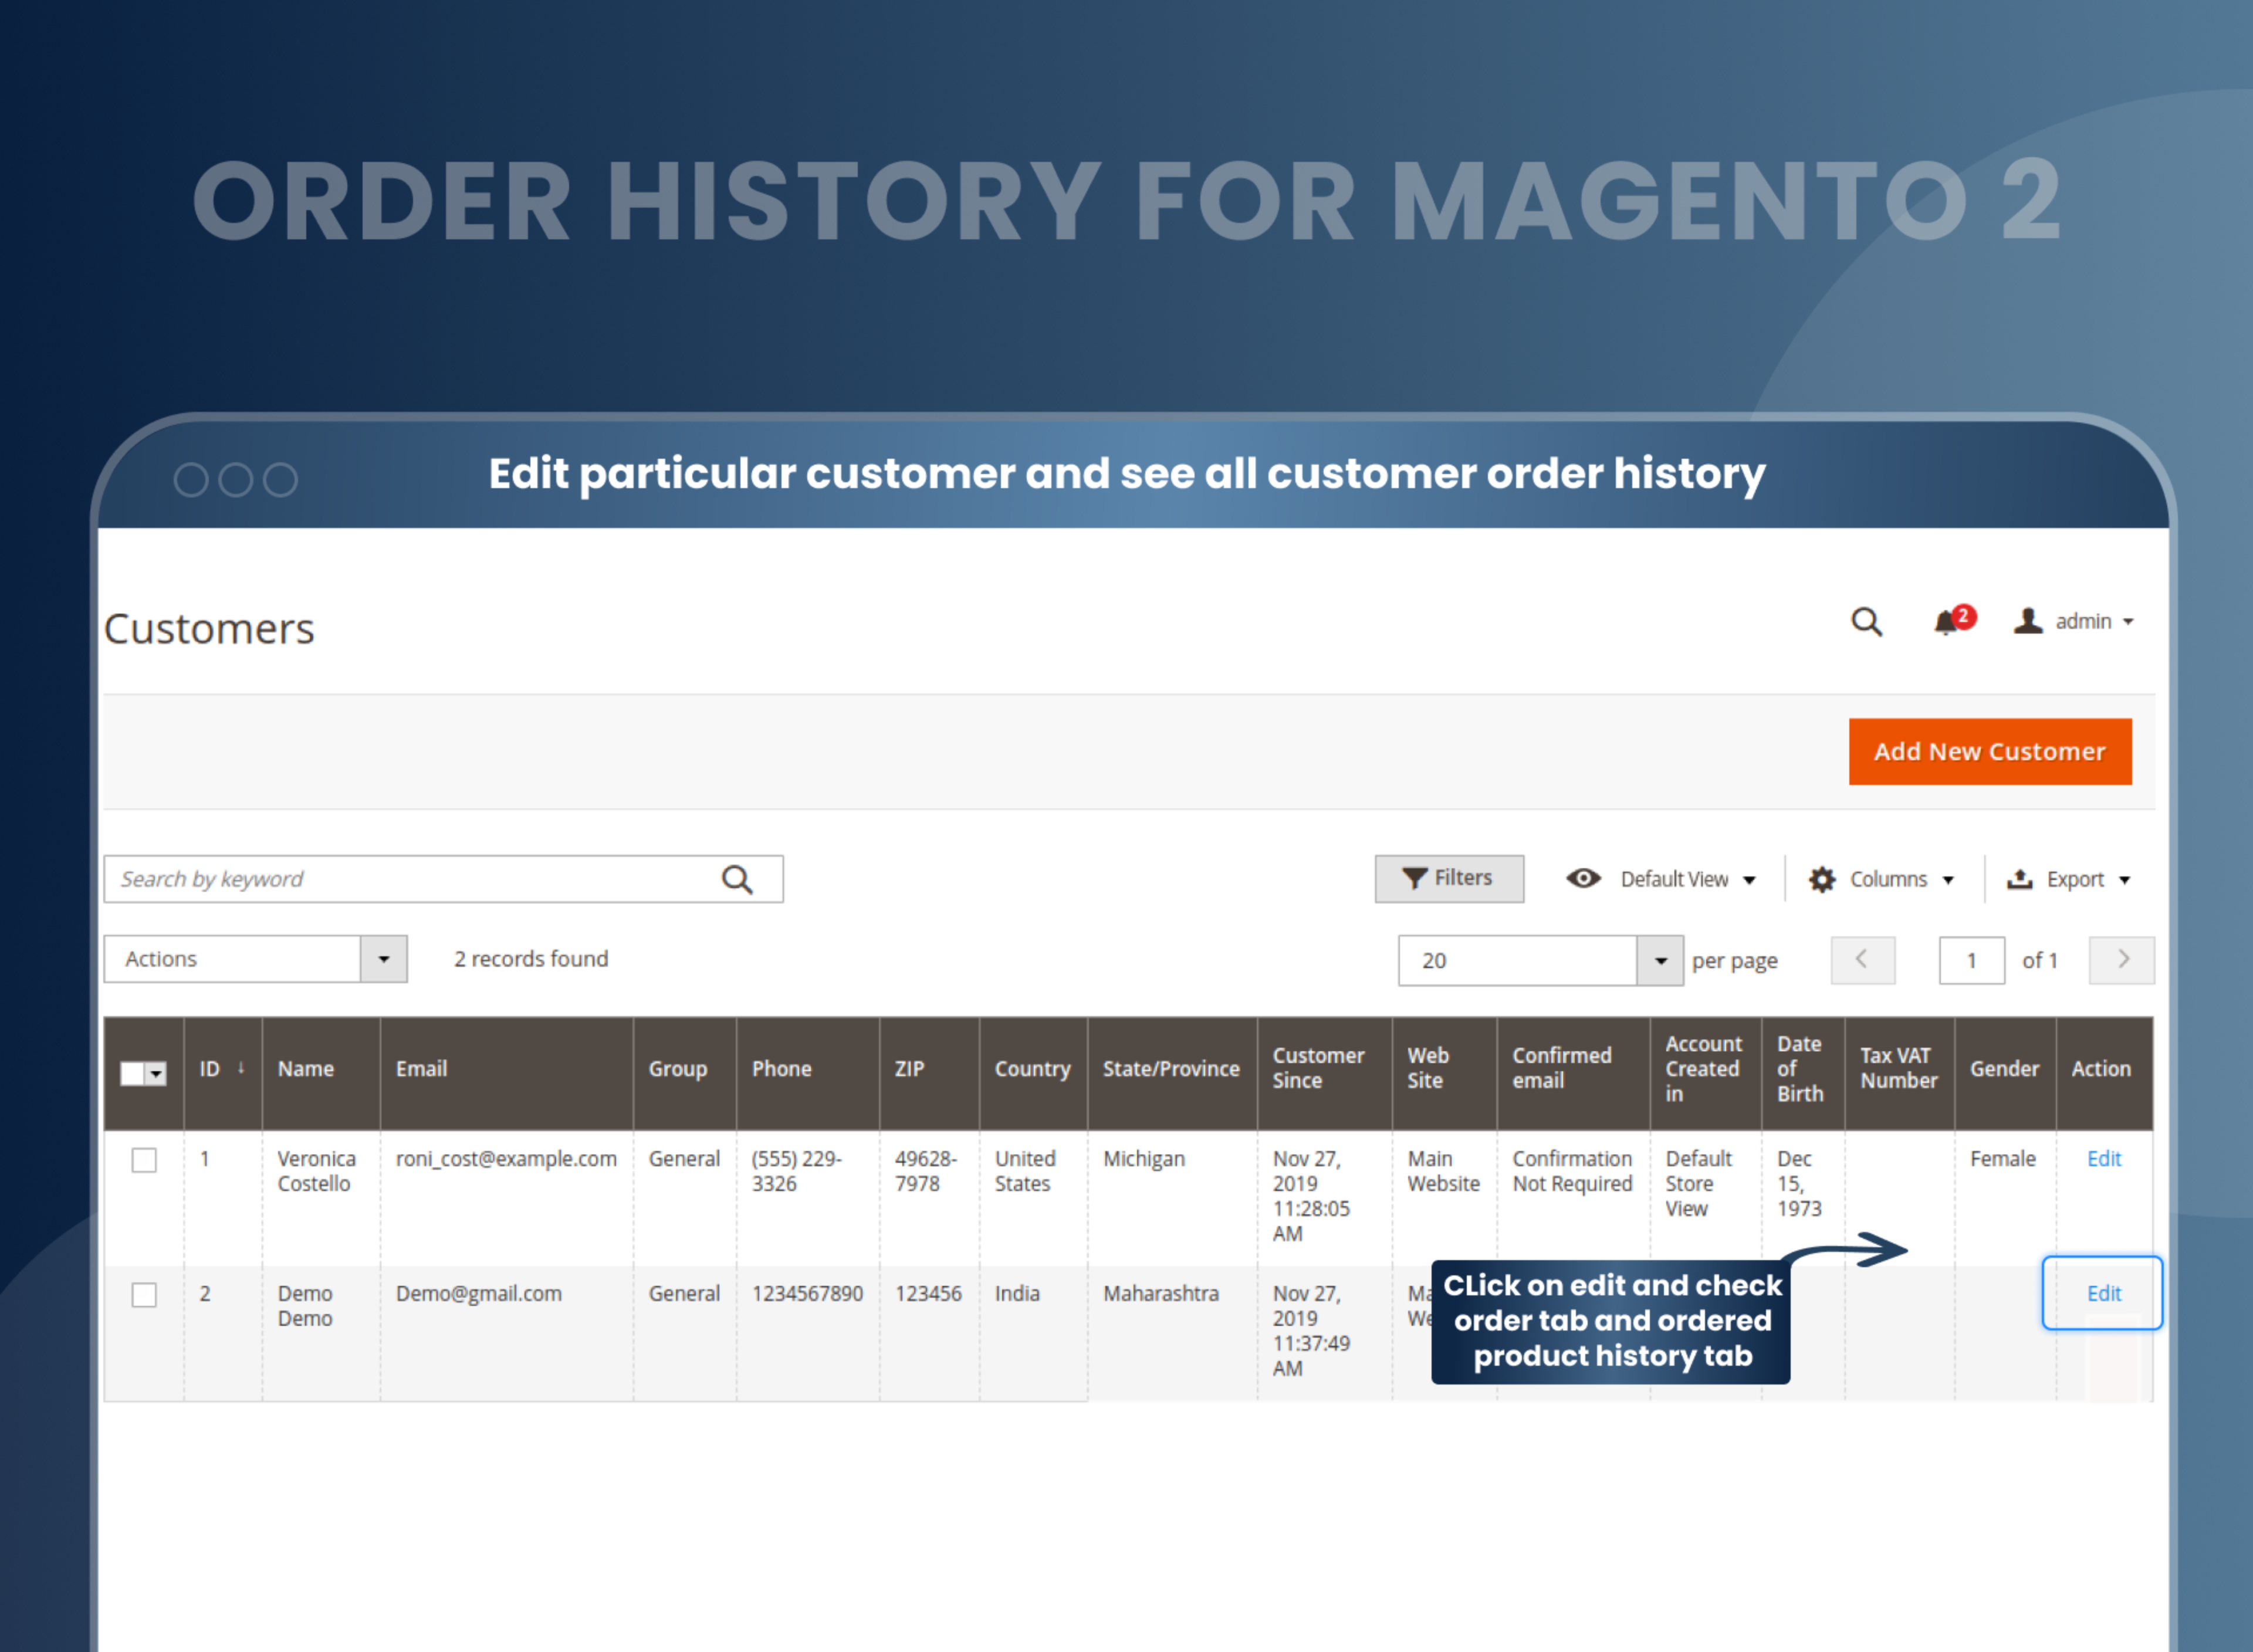 Edit particular customer and see all customer order history